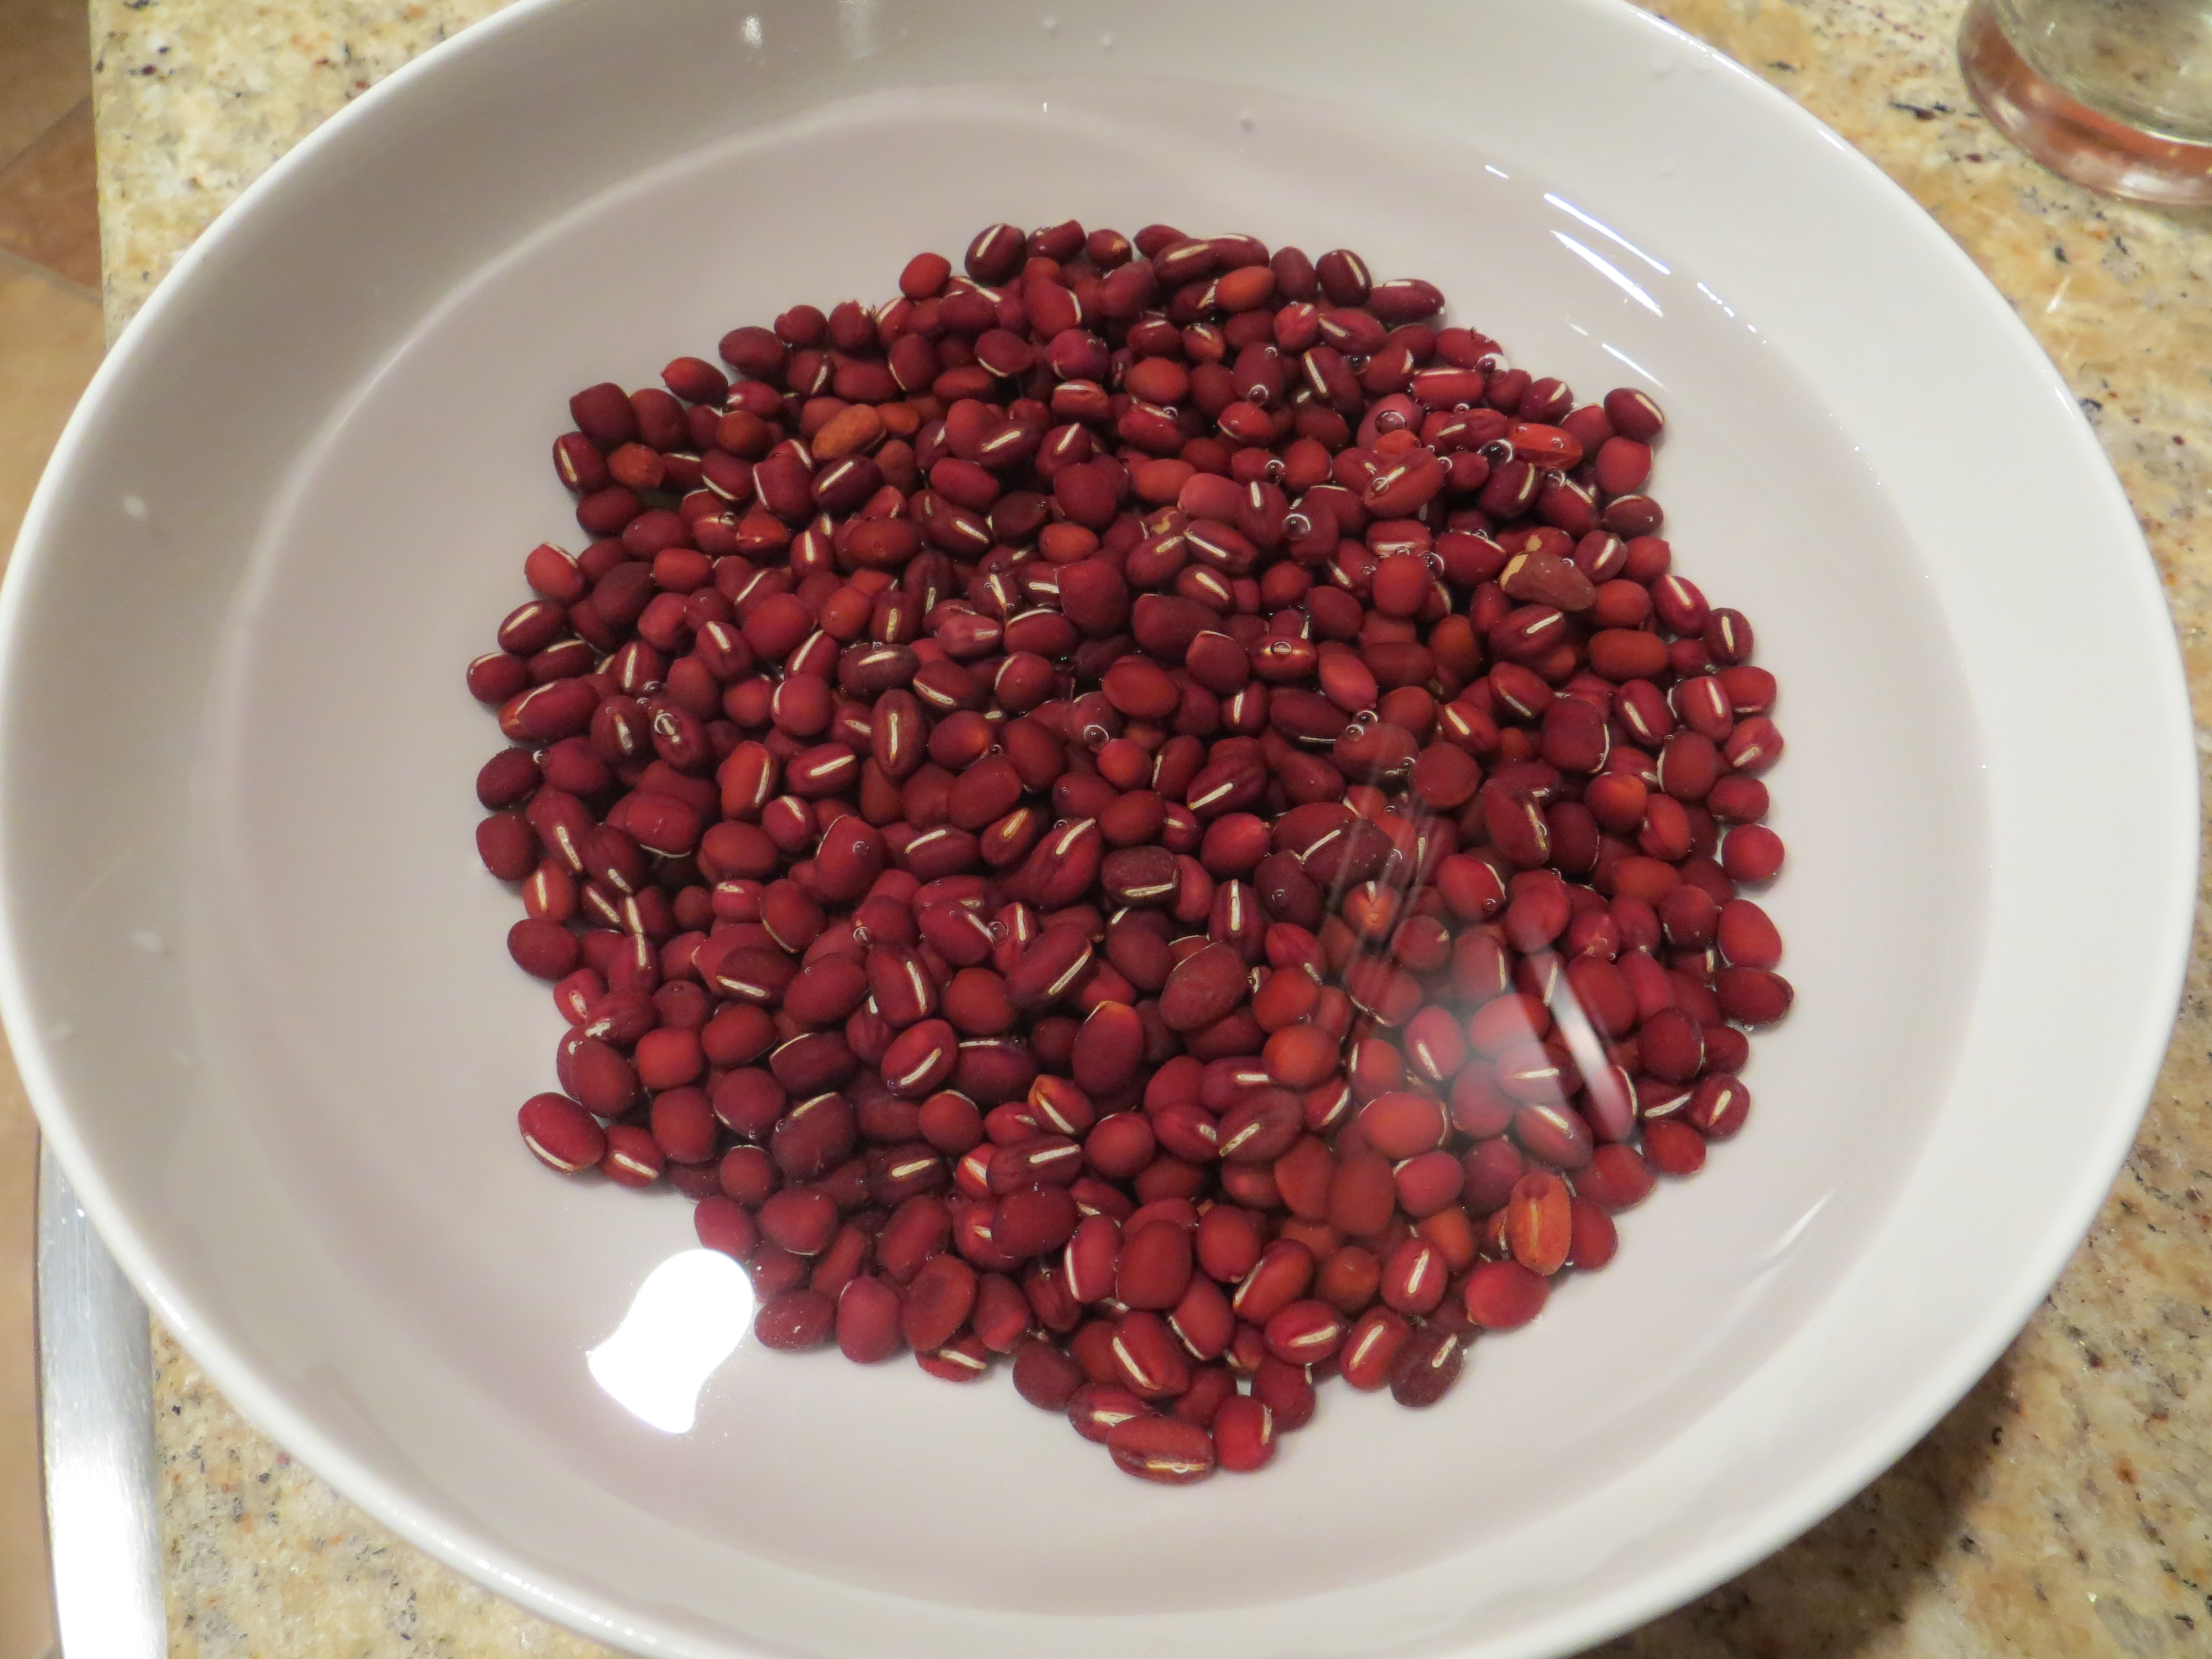 How to prepare adzuki beans.